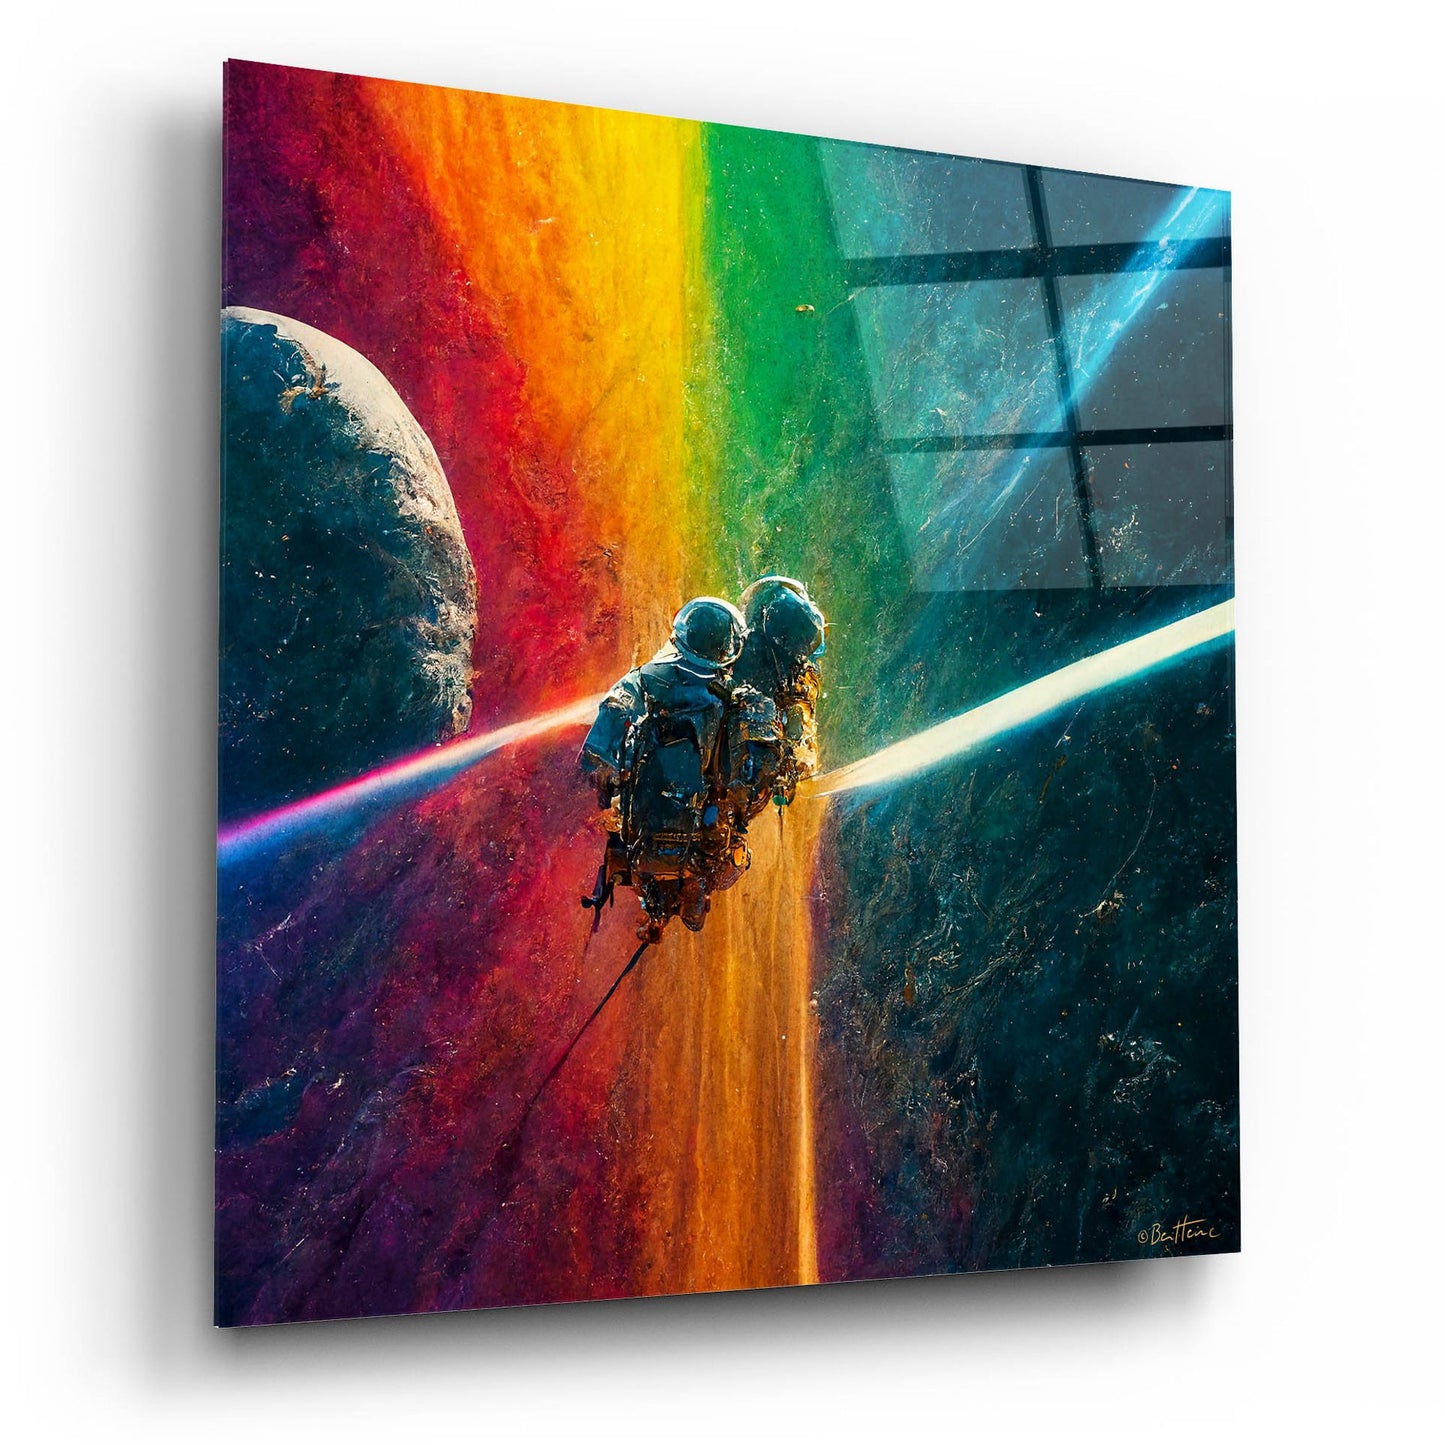 Epic Art 'Multi Rainbow' by Ben Heine, Acrylic Glass Wall Art,12x12